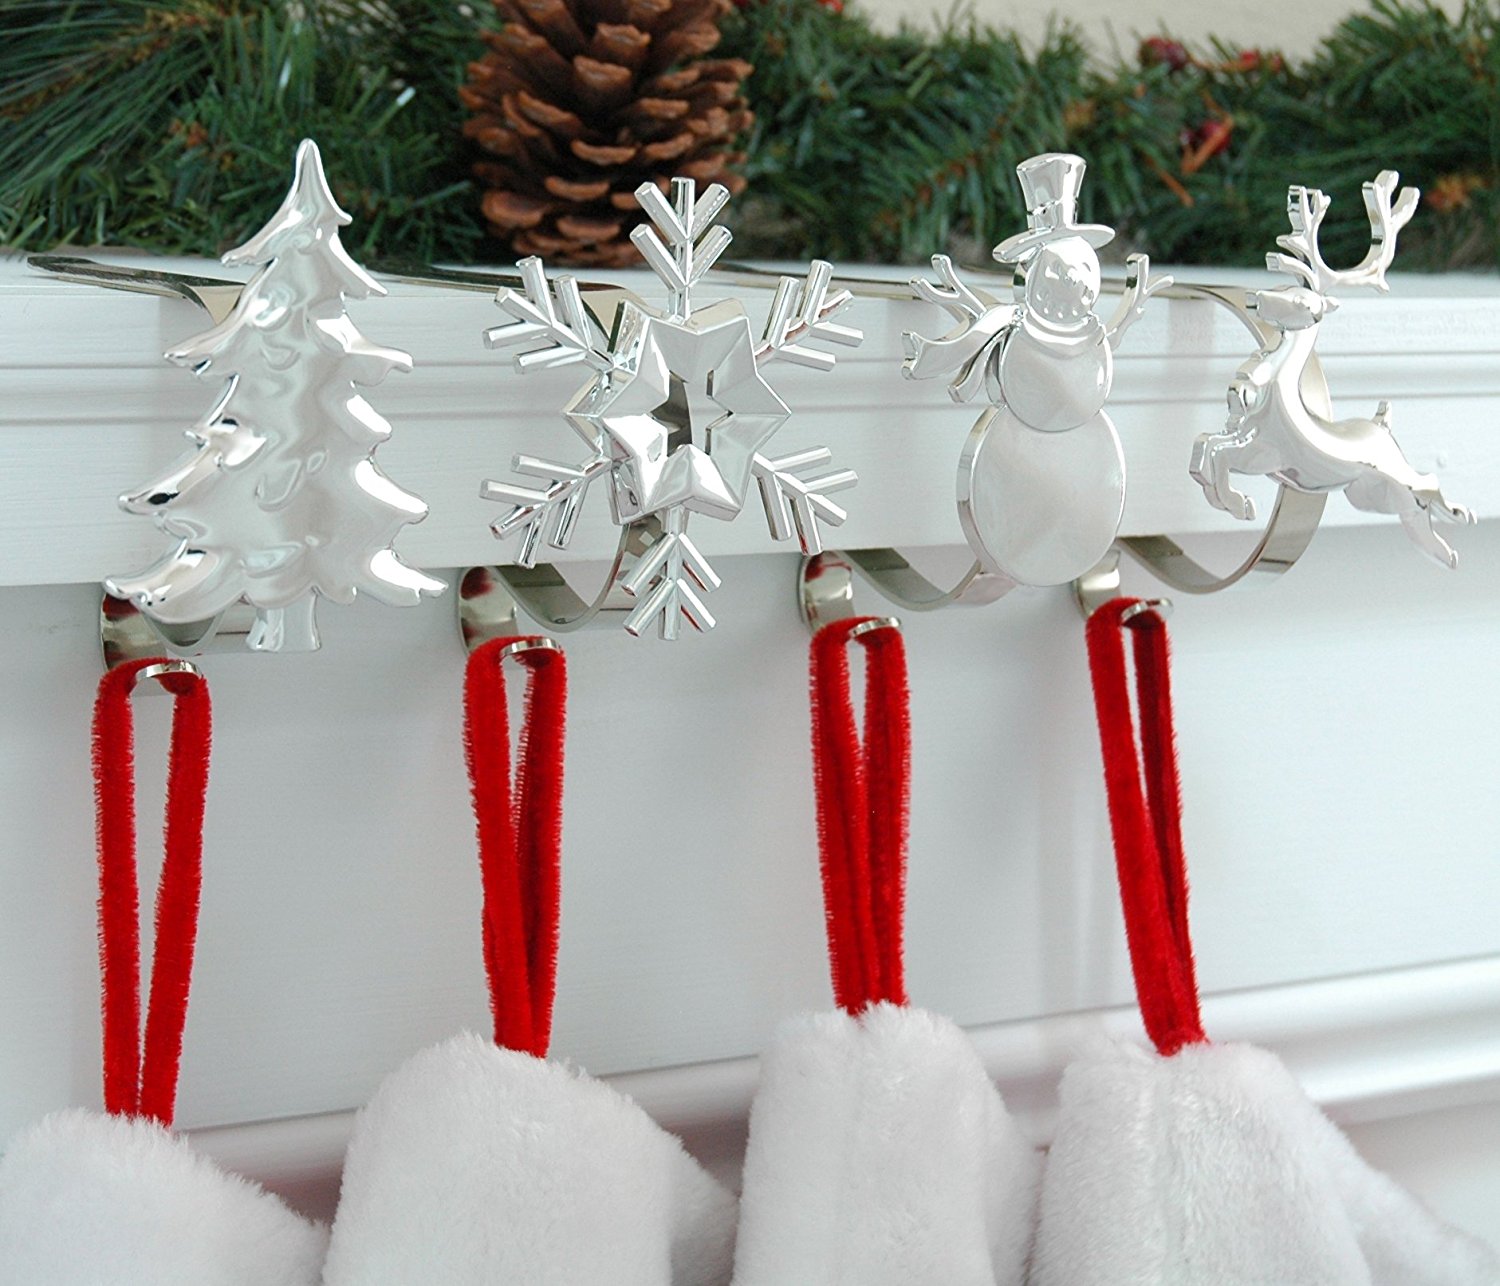 Set of 6 JEKOSEN 2020 Christmas Stocking Holder Hanger Hook Fireplace/Mantel Rose Gold Plating Hook with Christmas Elements Brooch Decoration Rose Gold